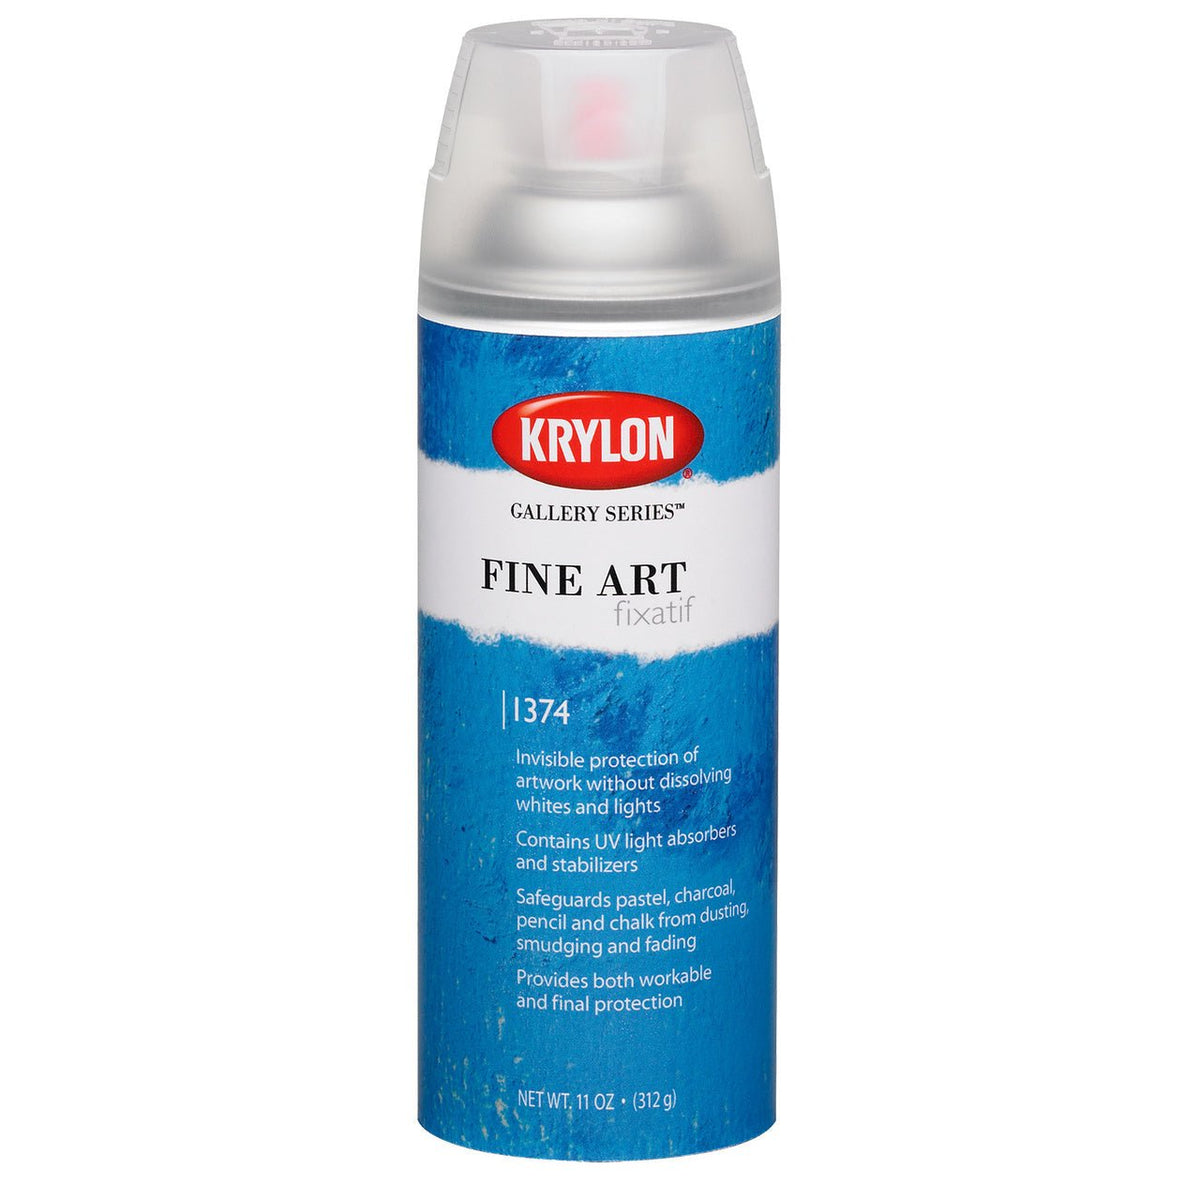 Steps on How To Apply Spray Fixative to Artwork